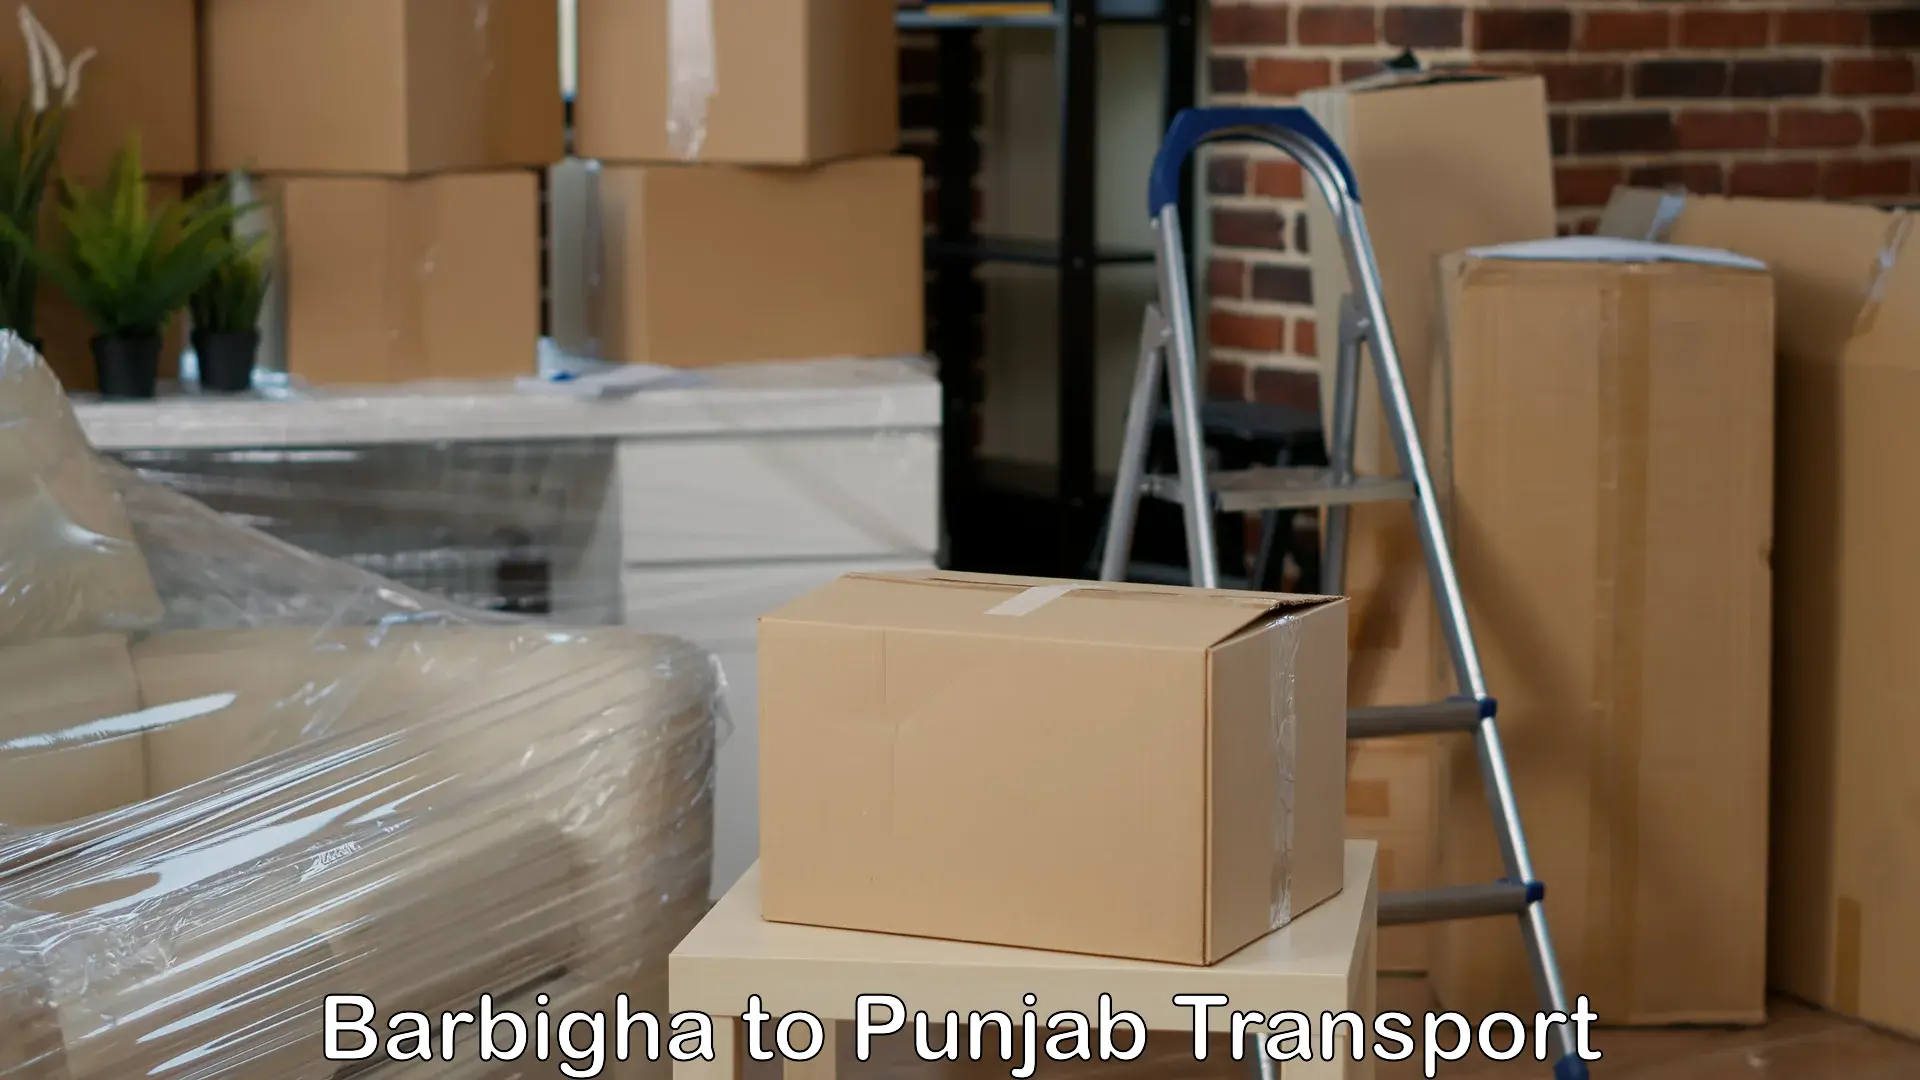 Furniture transport service Barbigha to Amritsar